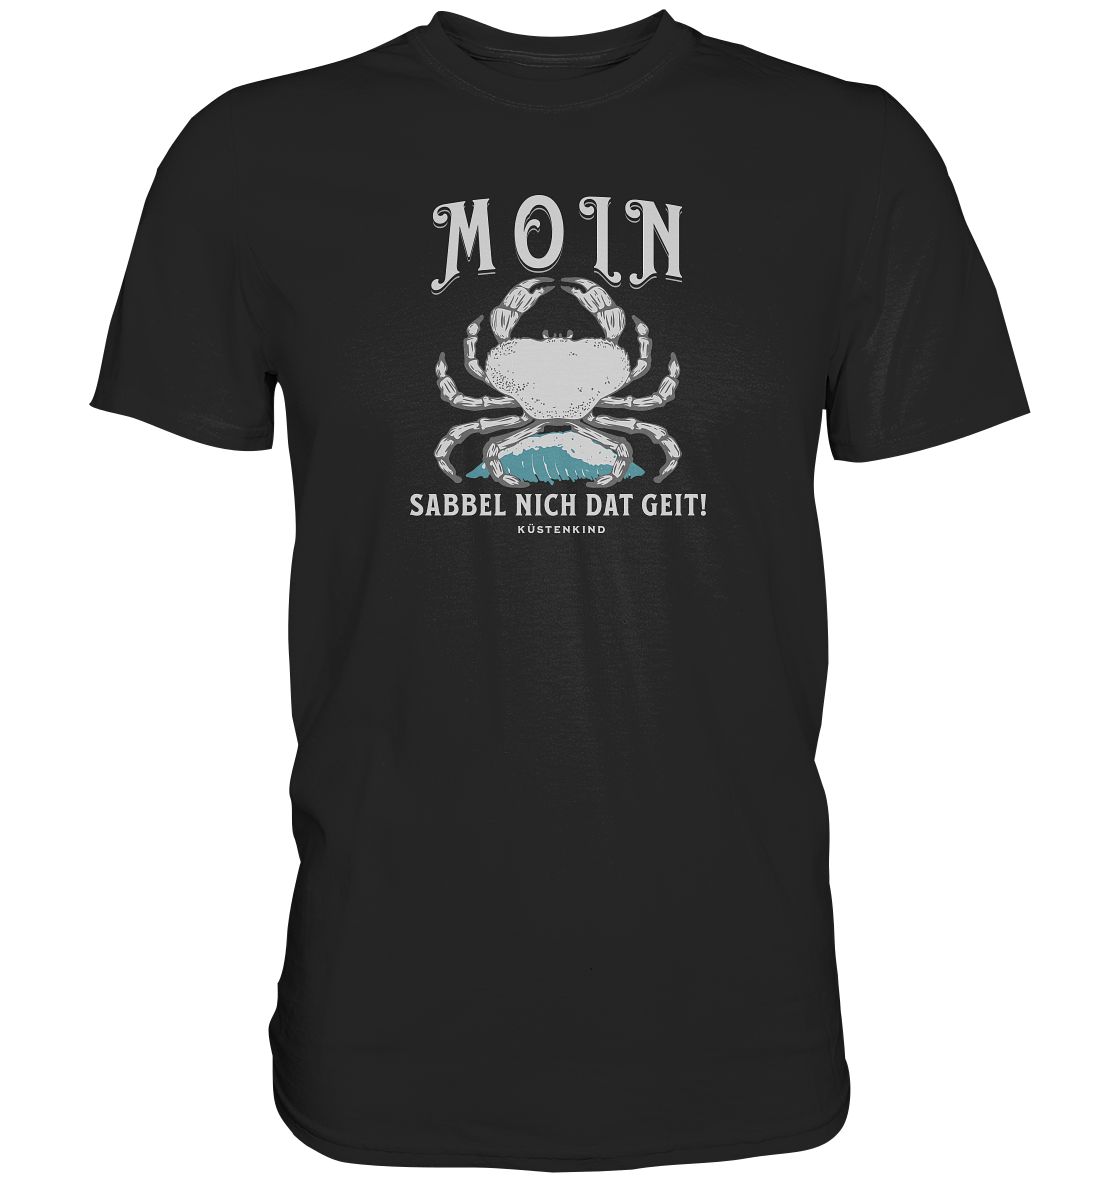 Moin sabbel nich´ - Premium Shirt